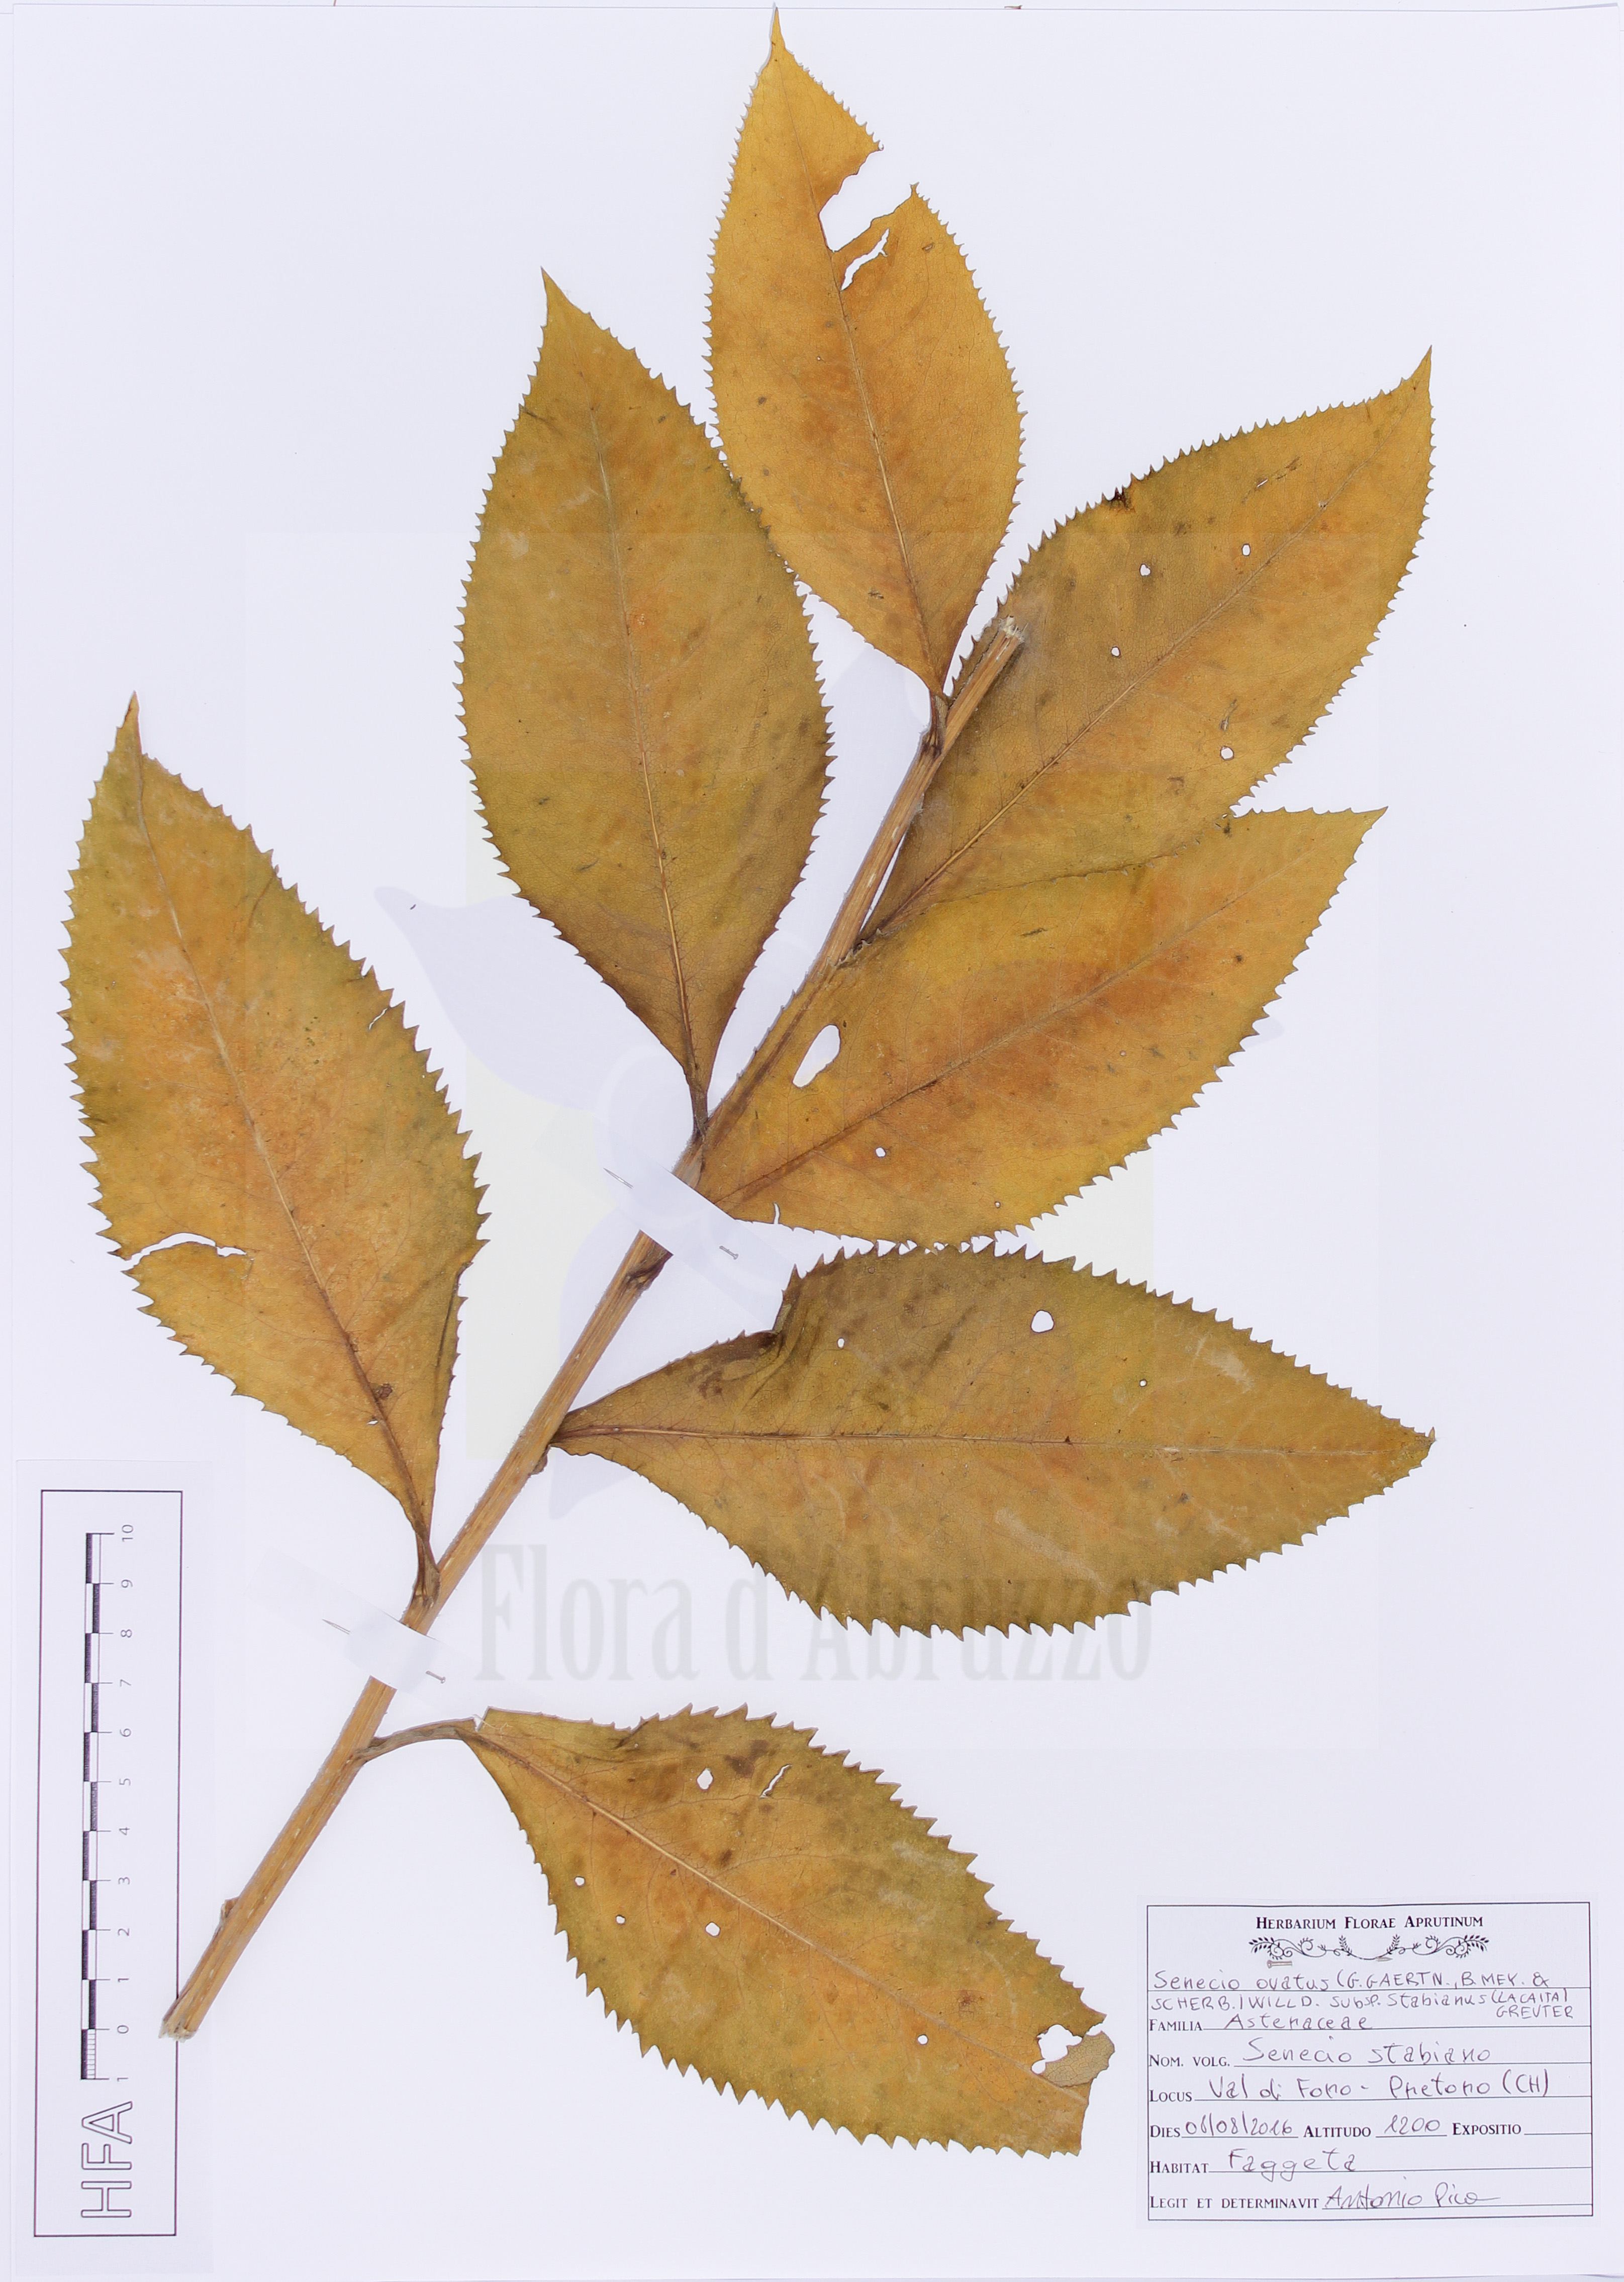 Senecio ovatus (G.Gaertn., B.Mey. & Scherb.) Willd. subsp. stabianus (Lacaita) Greuter